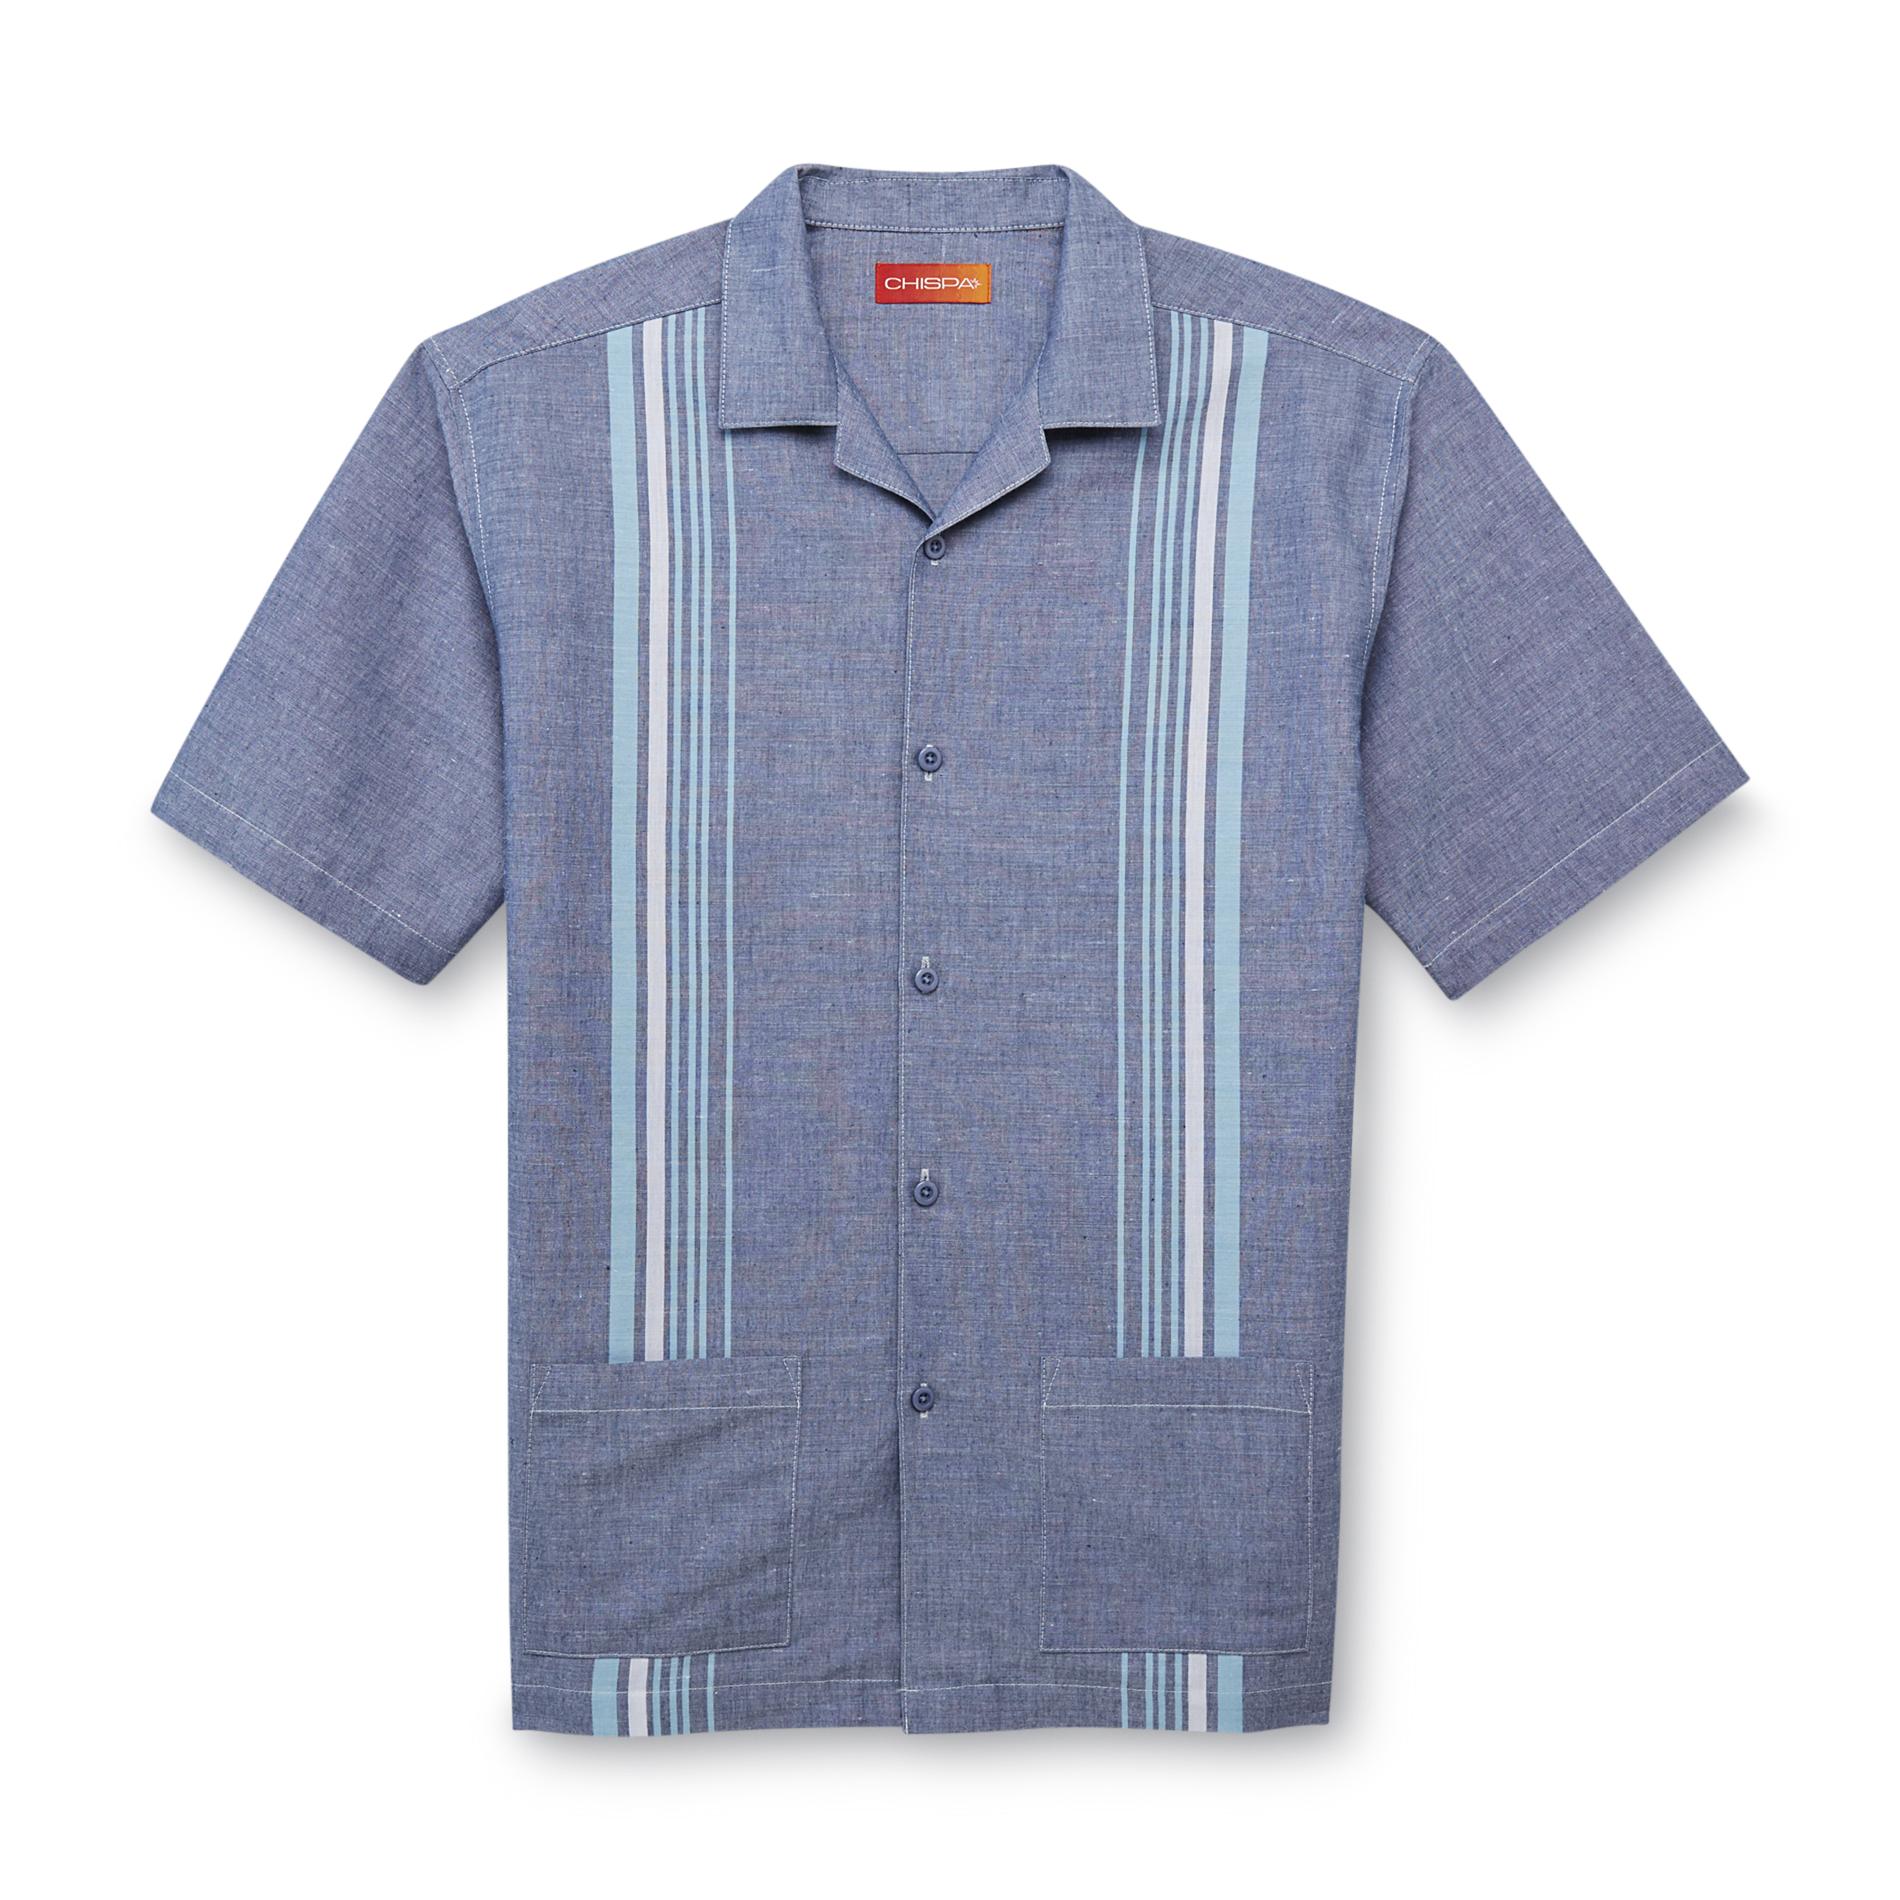 Chispa Men's Short-Sleeve Chambray Shirt - Vertical Stripes